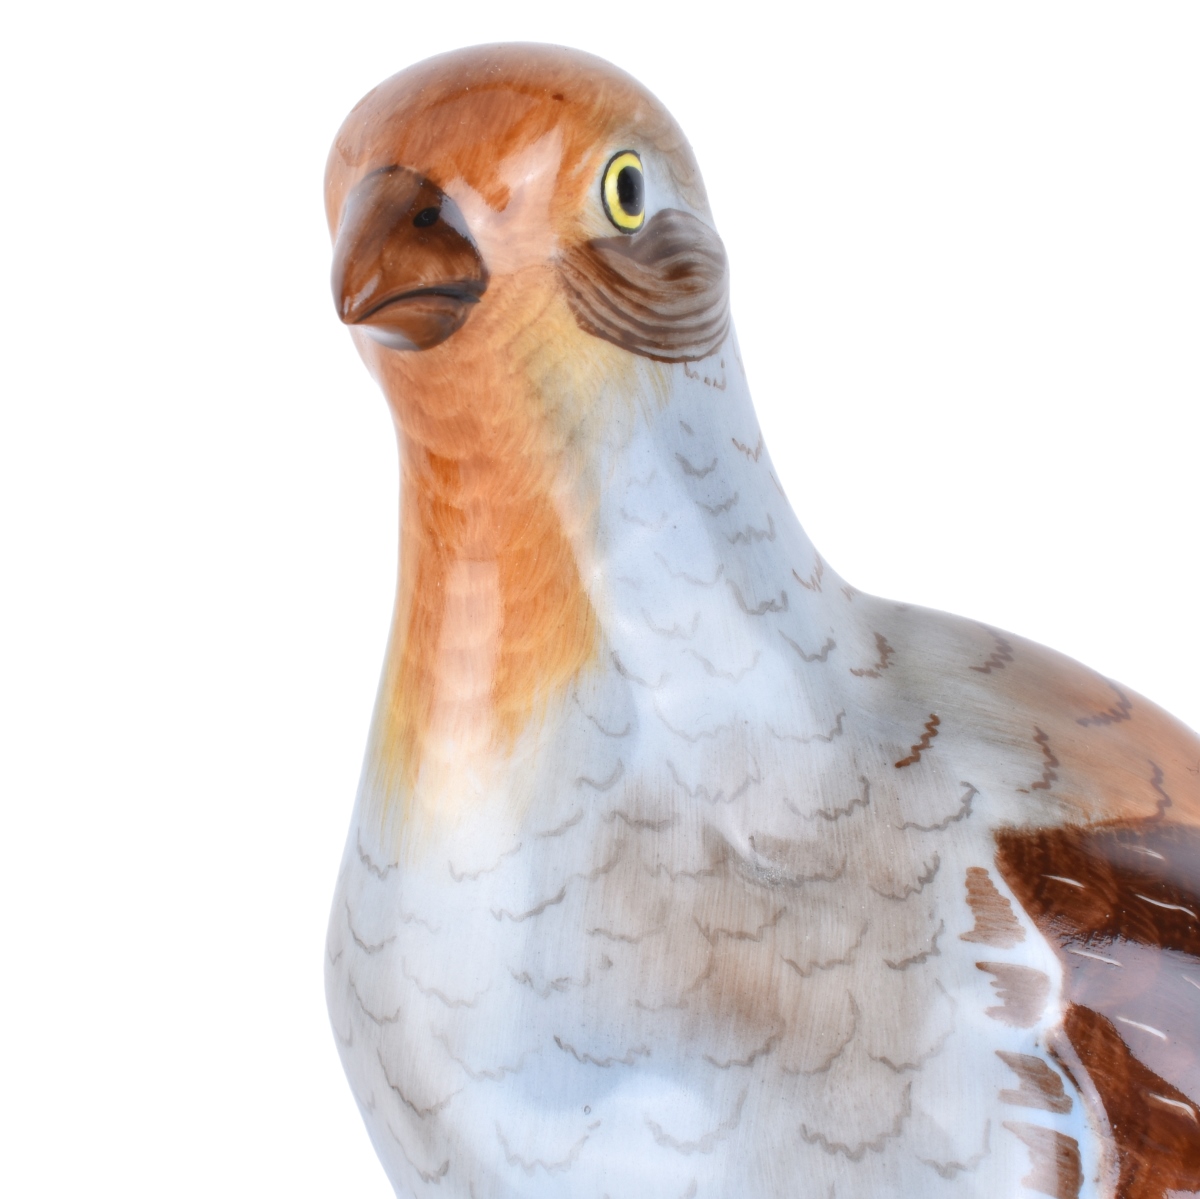 Herend Bird Figurine